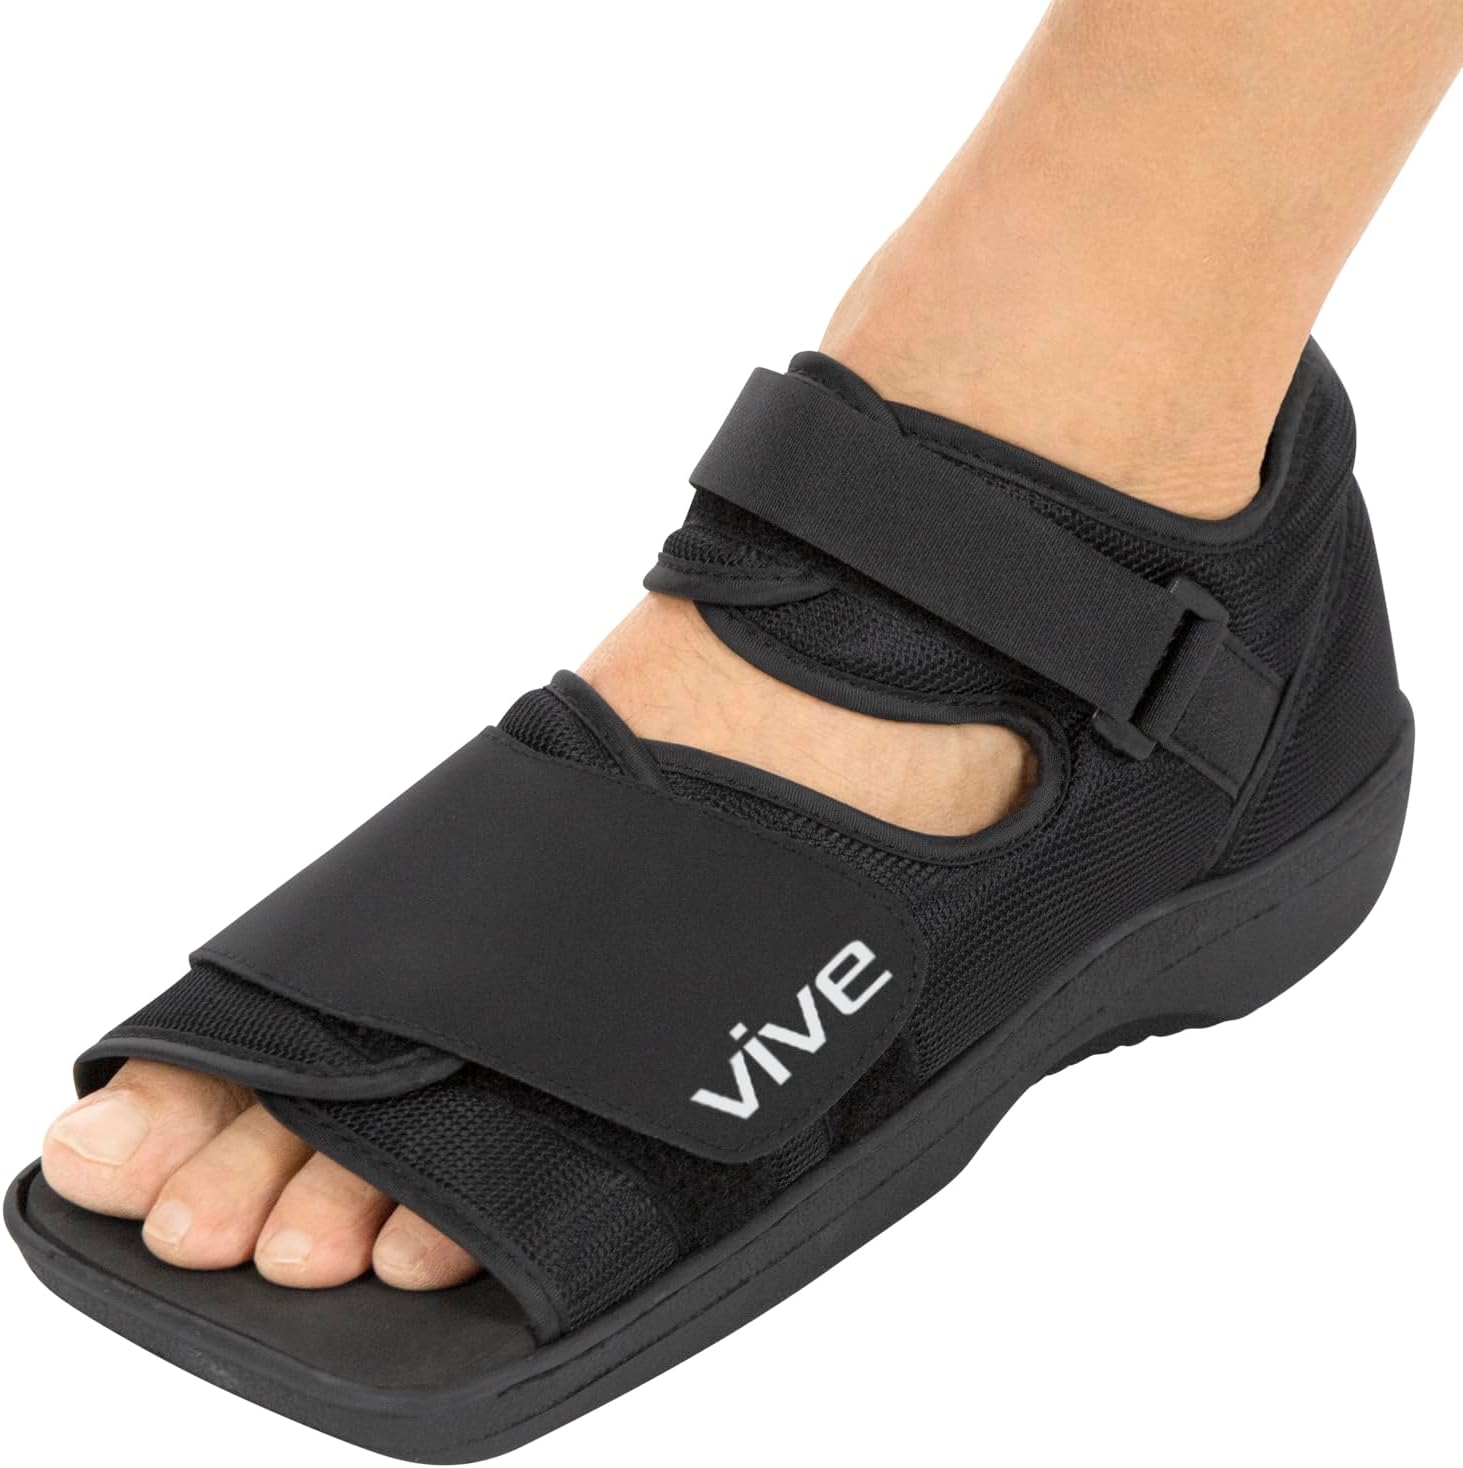 Vive Post Op Shoe - Lightweight Medical Walking Boot [...]